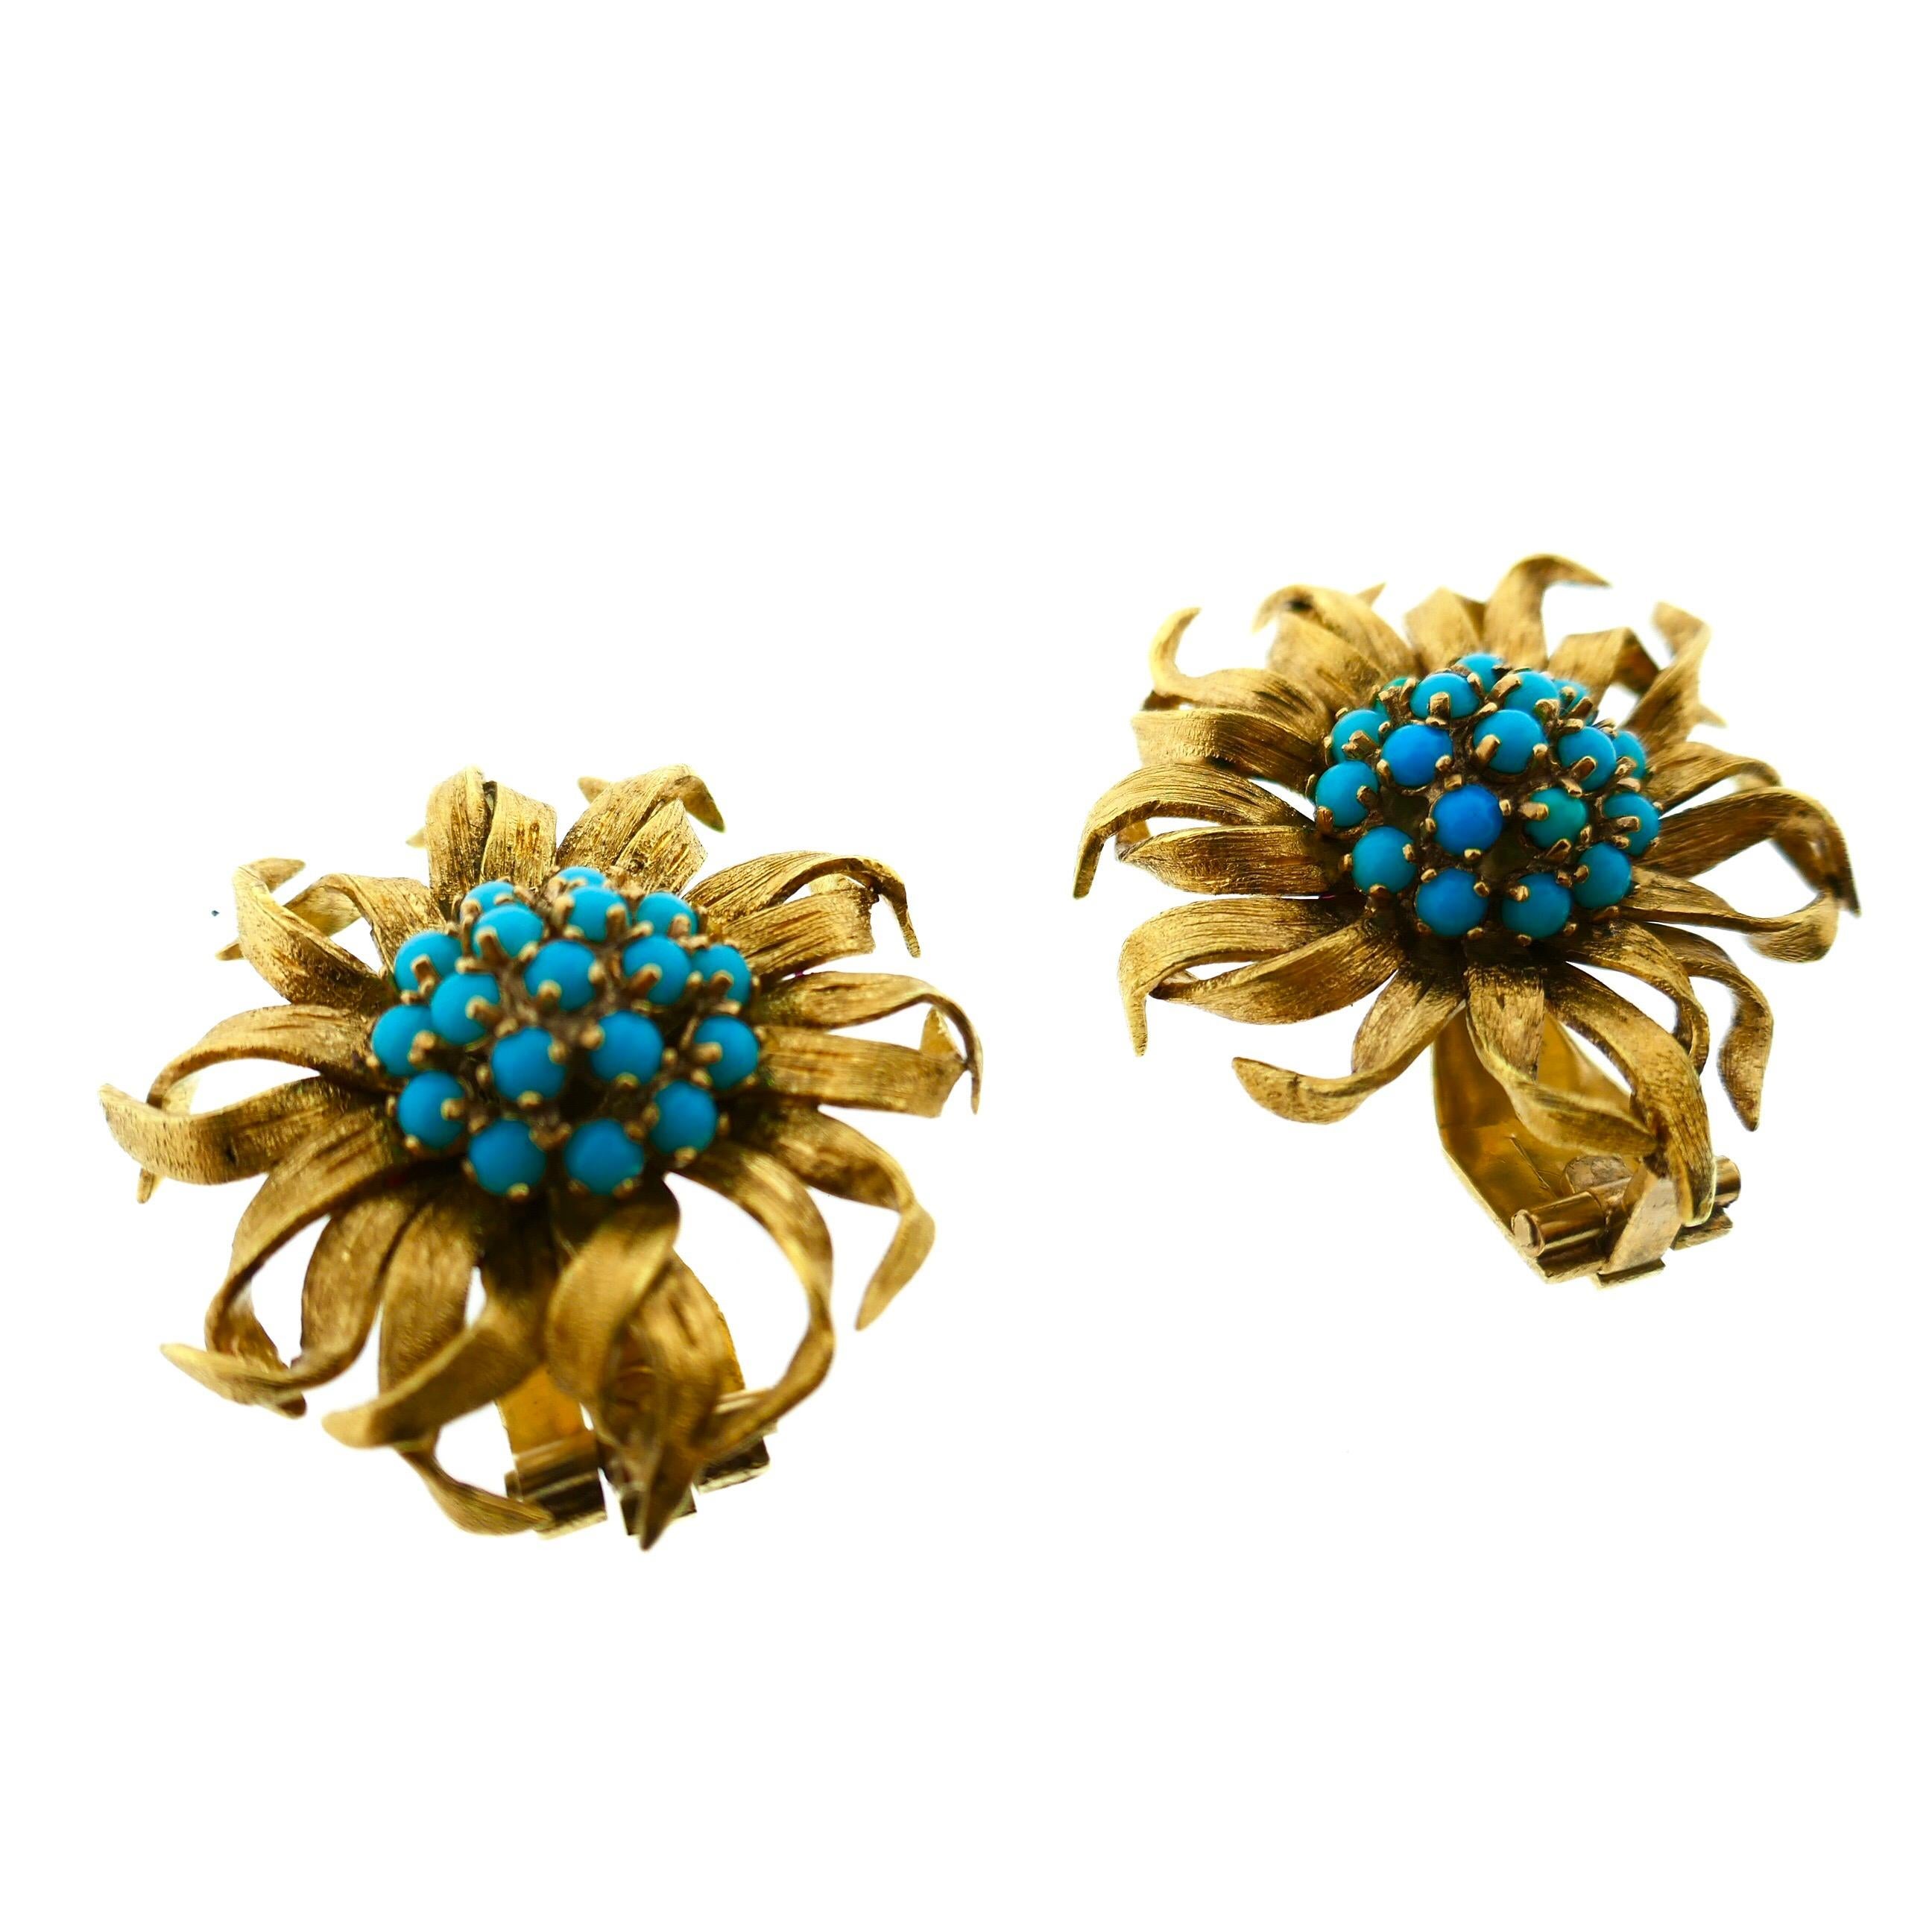 Cartier Paris 18 Karat Yellow Gold Turquoise Flower Brooch and Earrings Set 2